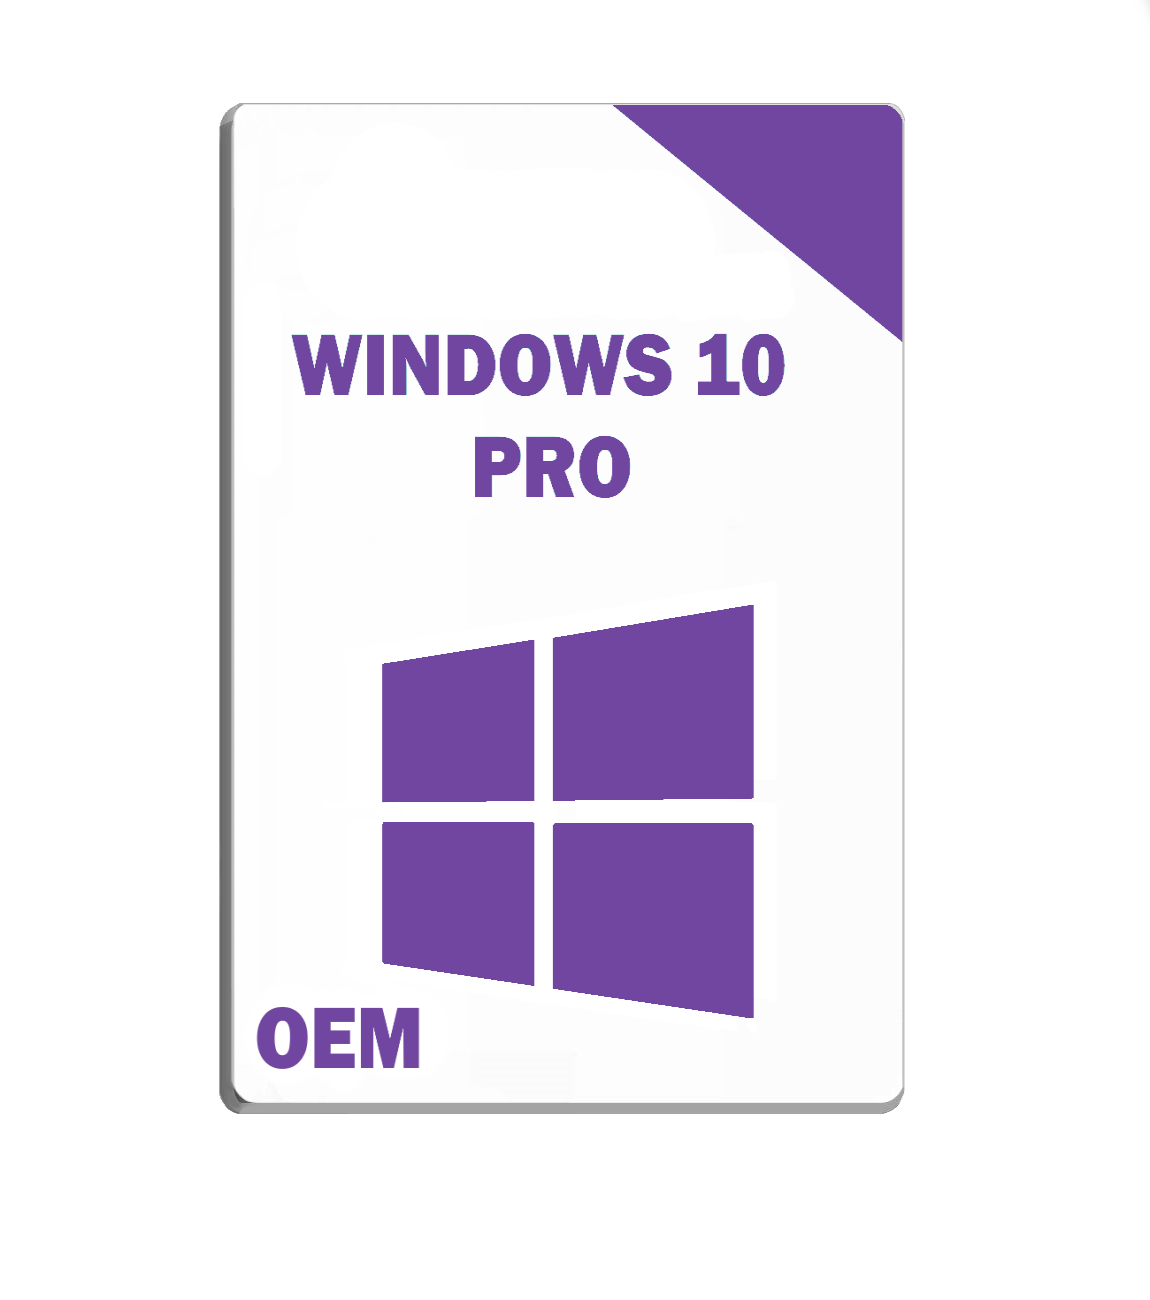 download windows 10 pro for oem